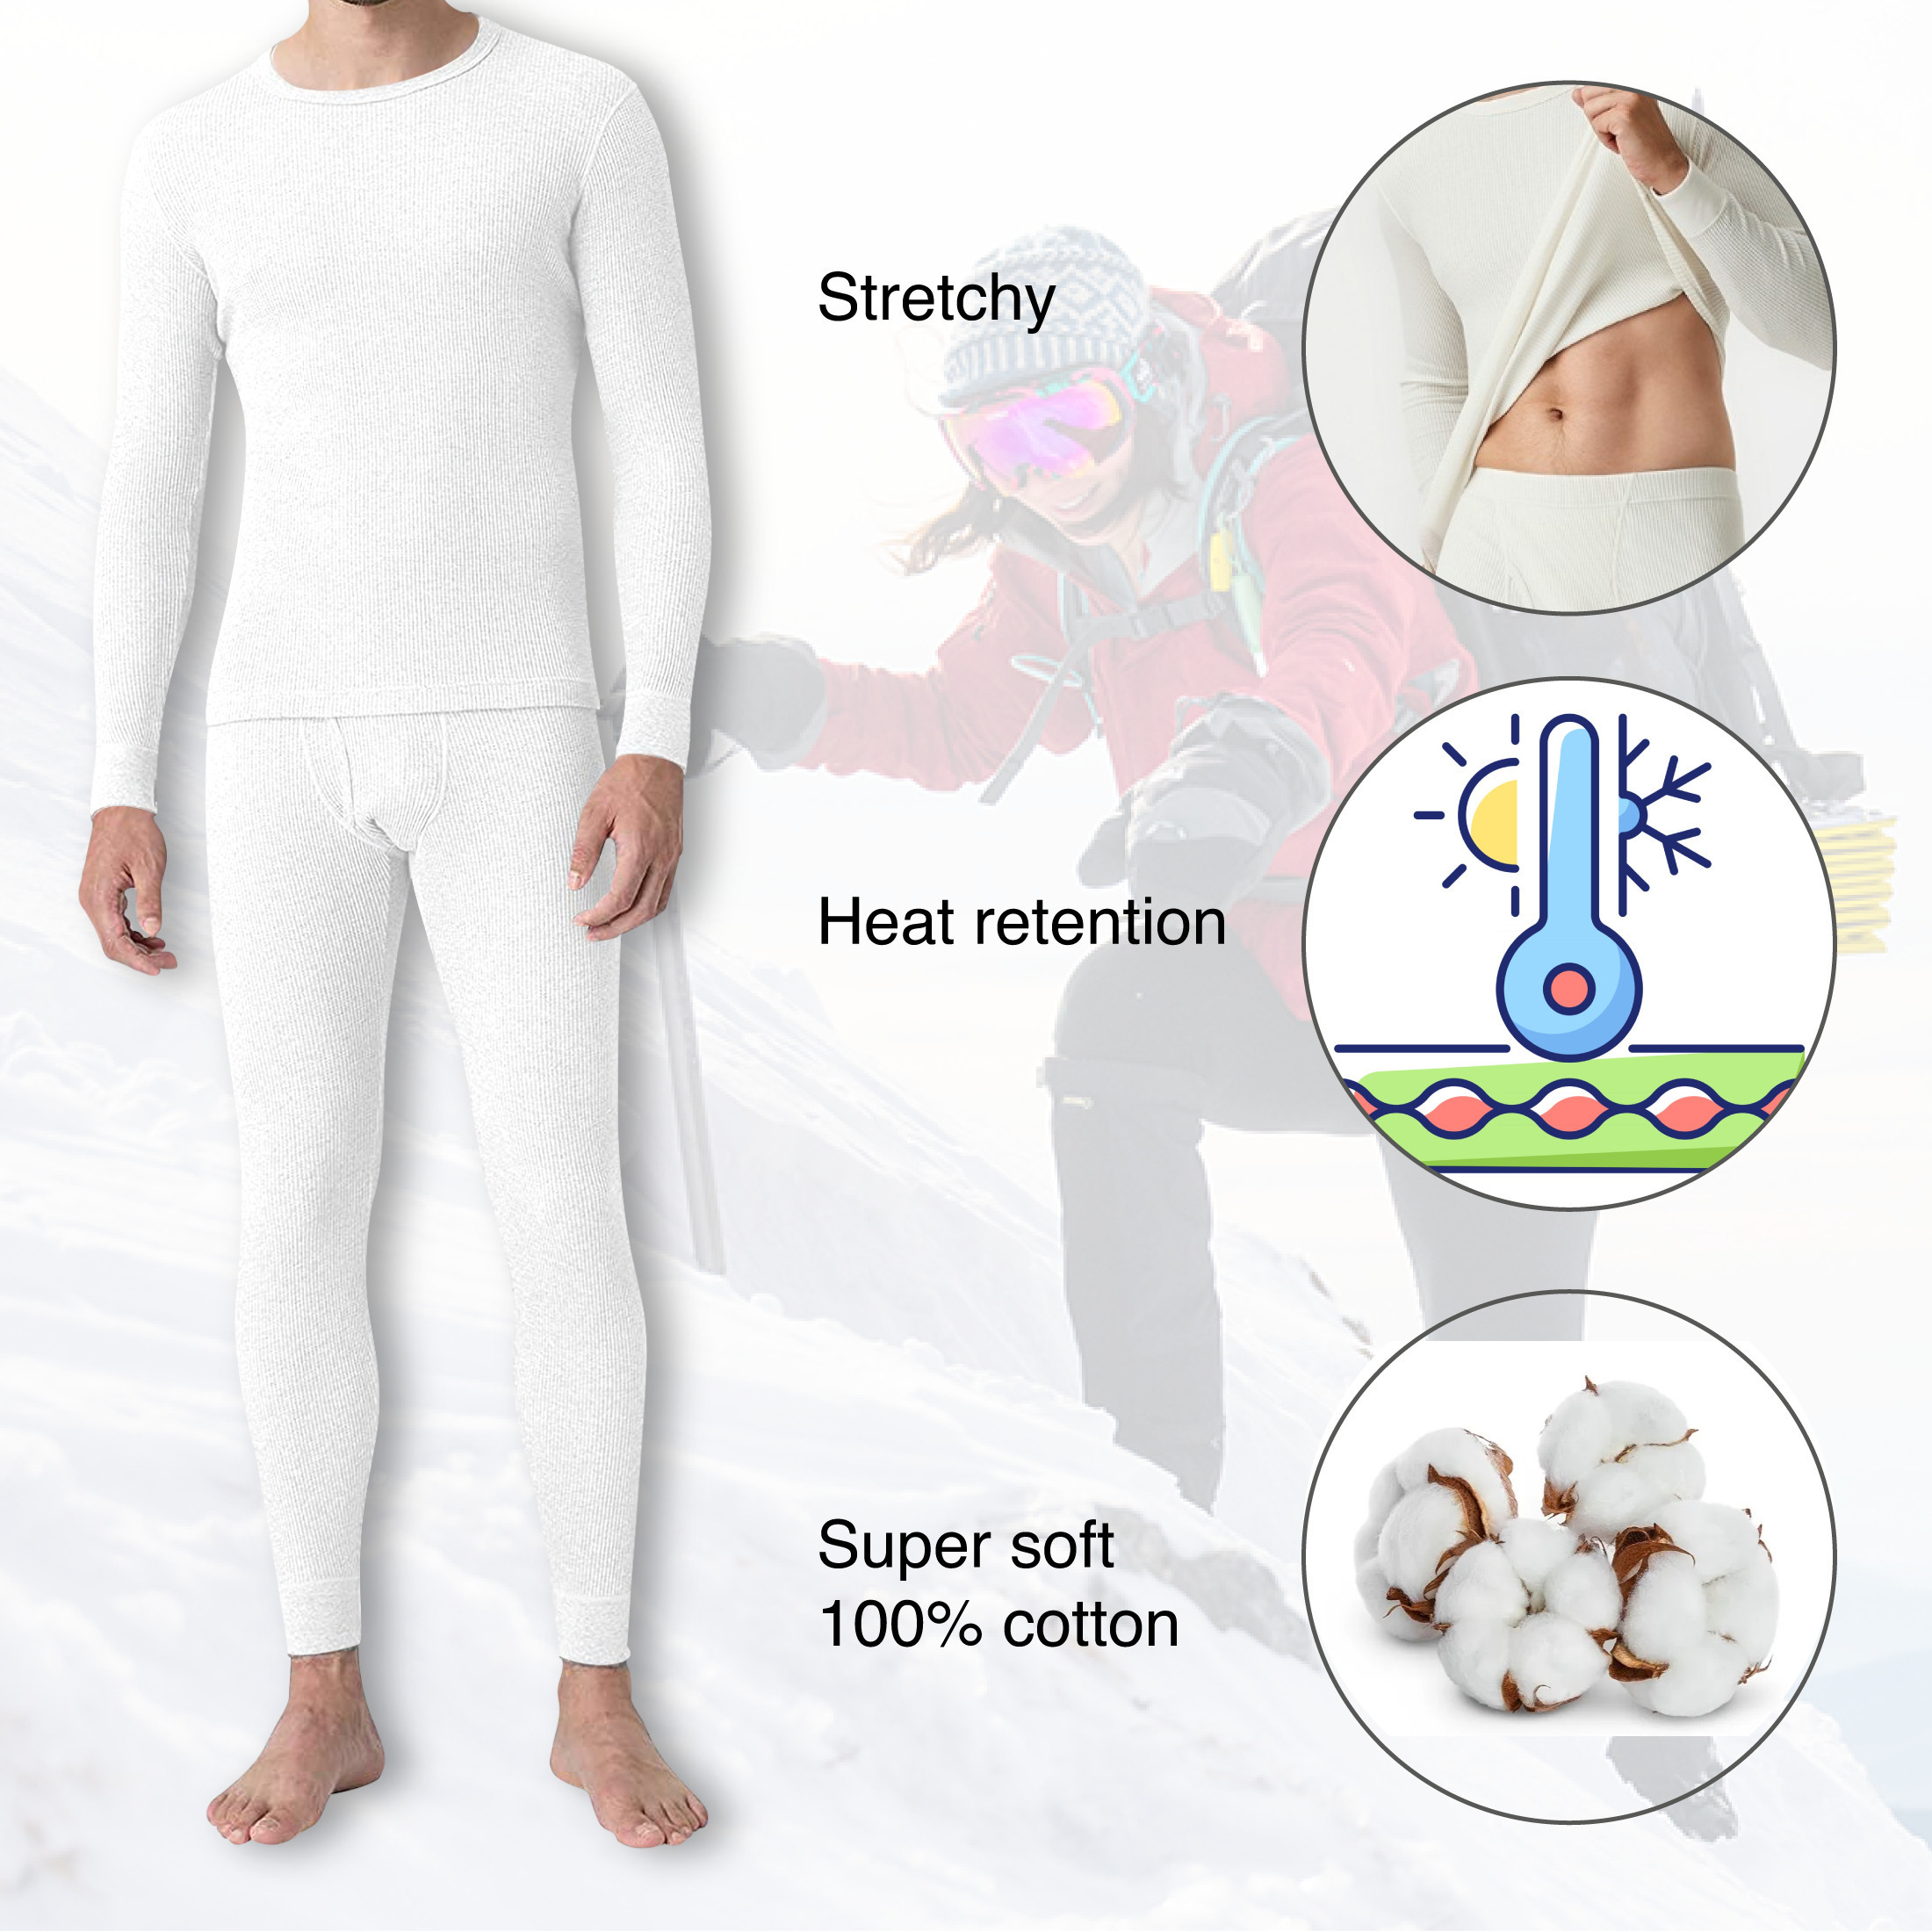 2-Sets: Men's Super Soft Cotton Waffle Knit Winter Thermal Underwear Set - Grey & Grey, Small